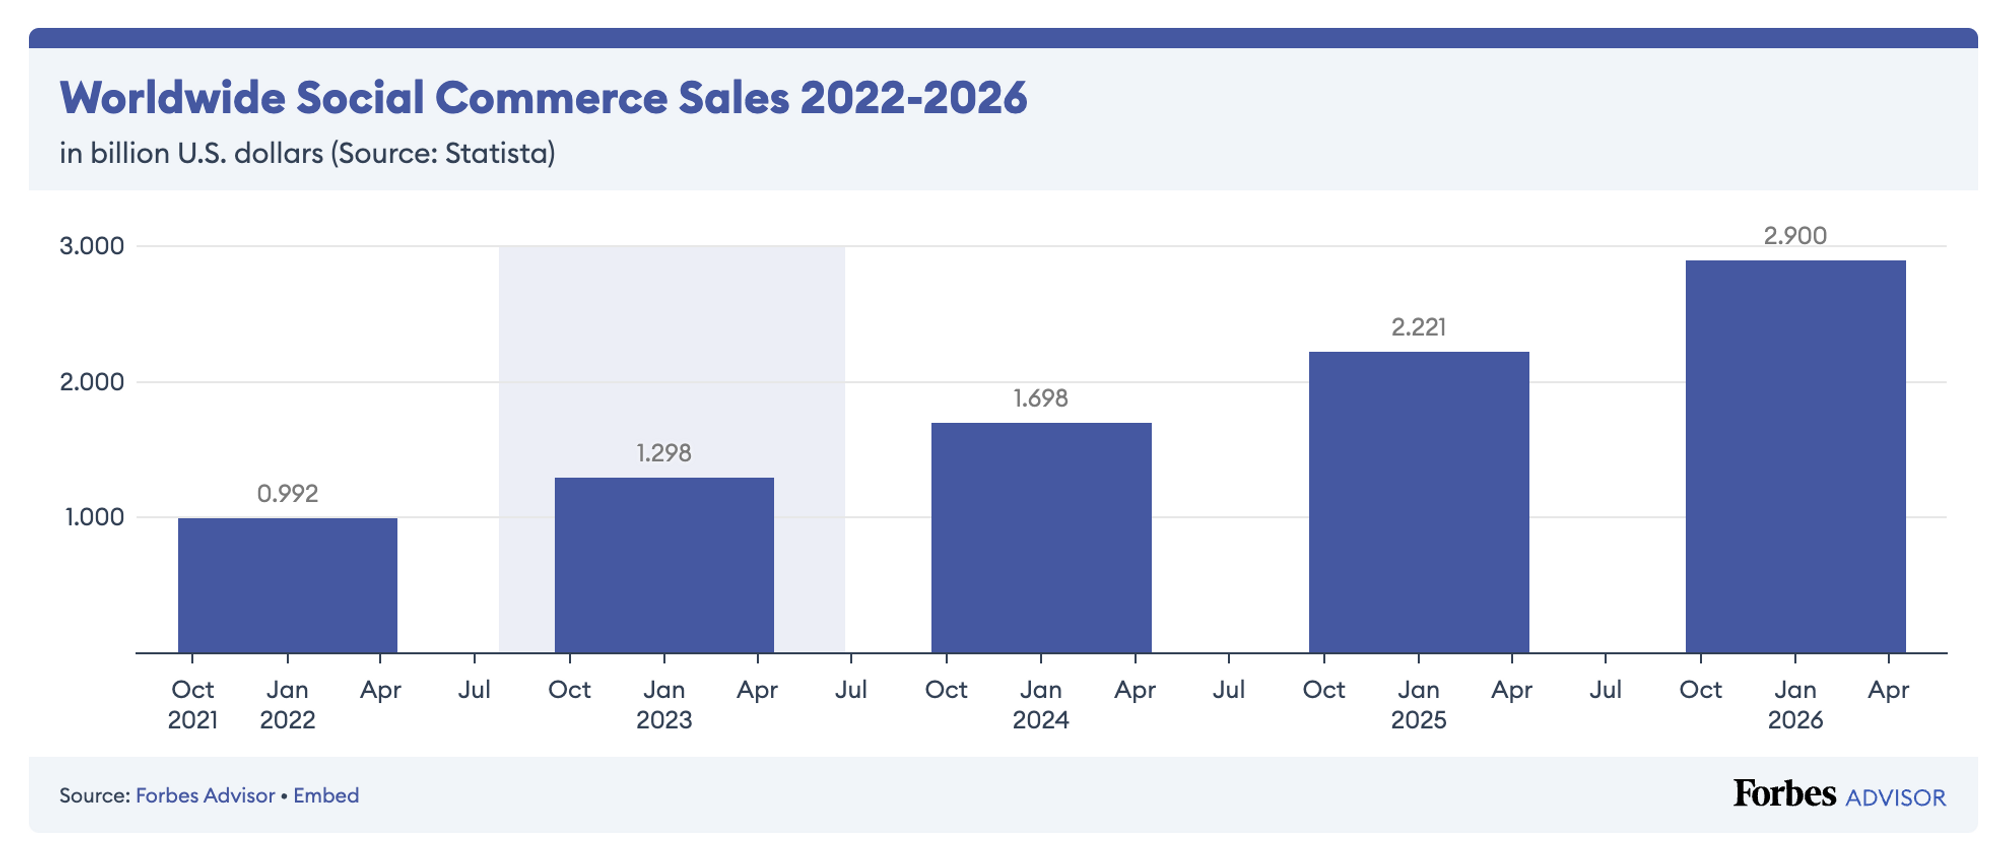 Global Social Commerce Sales 2022-2026